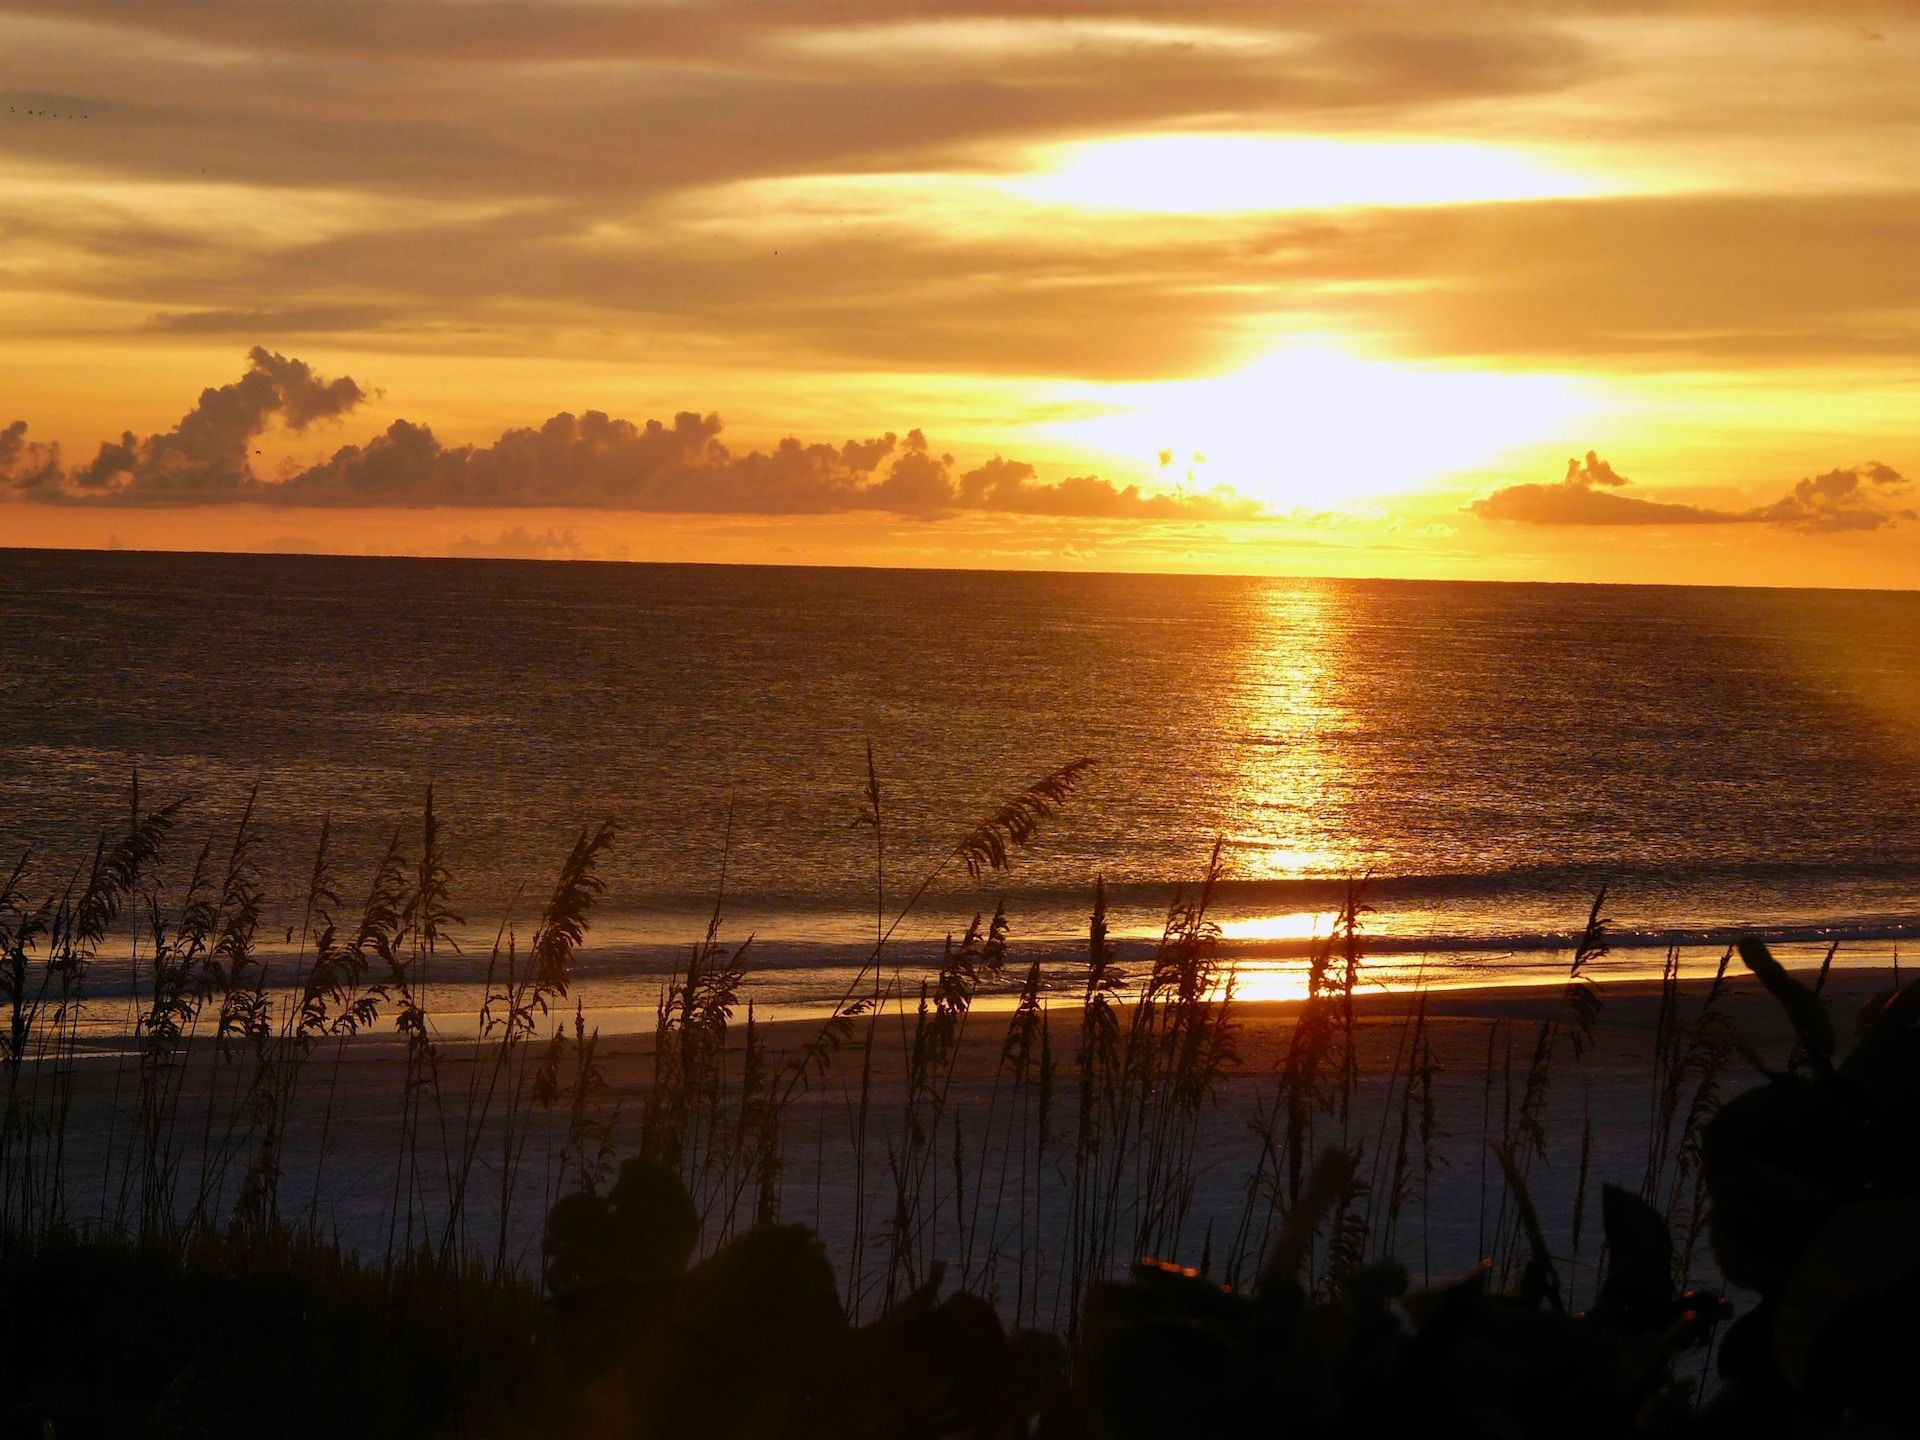 A beautiful sunset from a beach at Anna Maria Island, Florida.